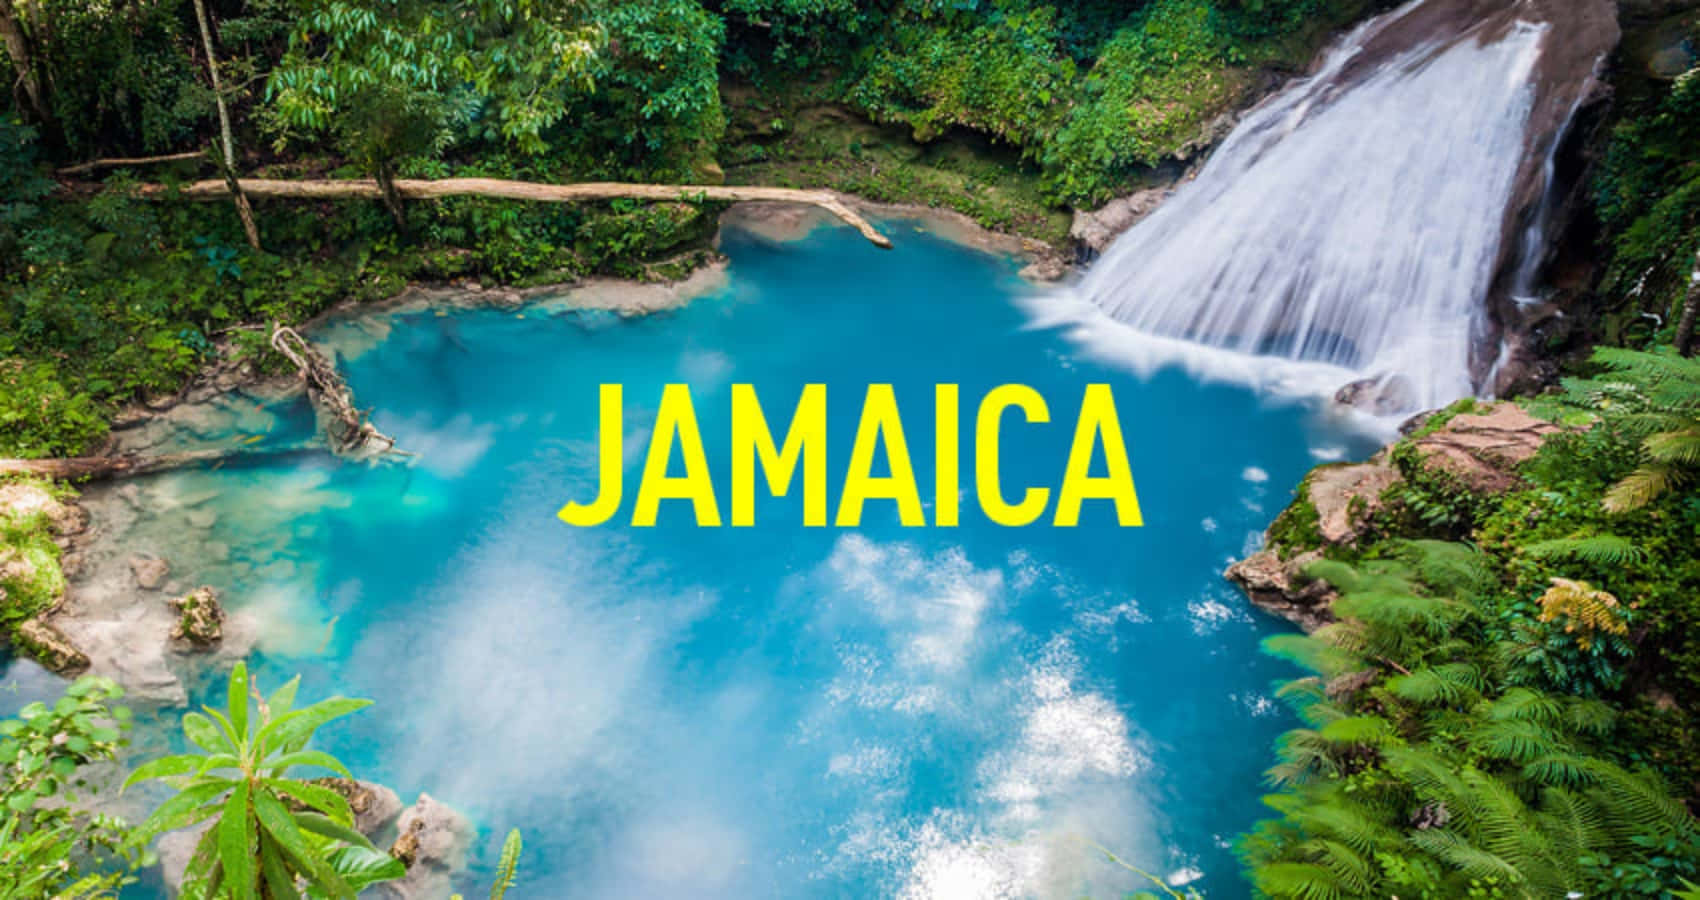 Escape to Paradise through Spectacular Jamaica